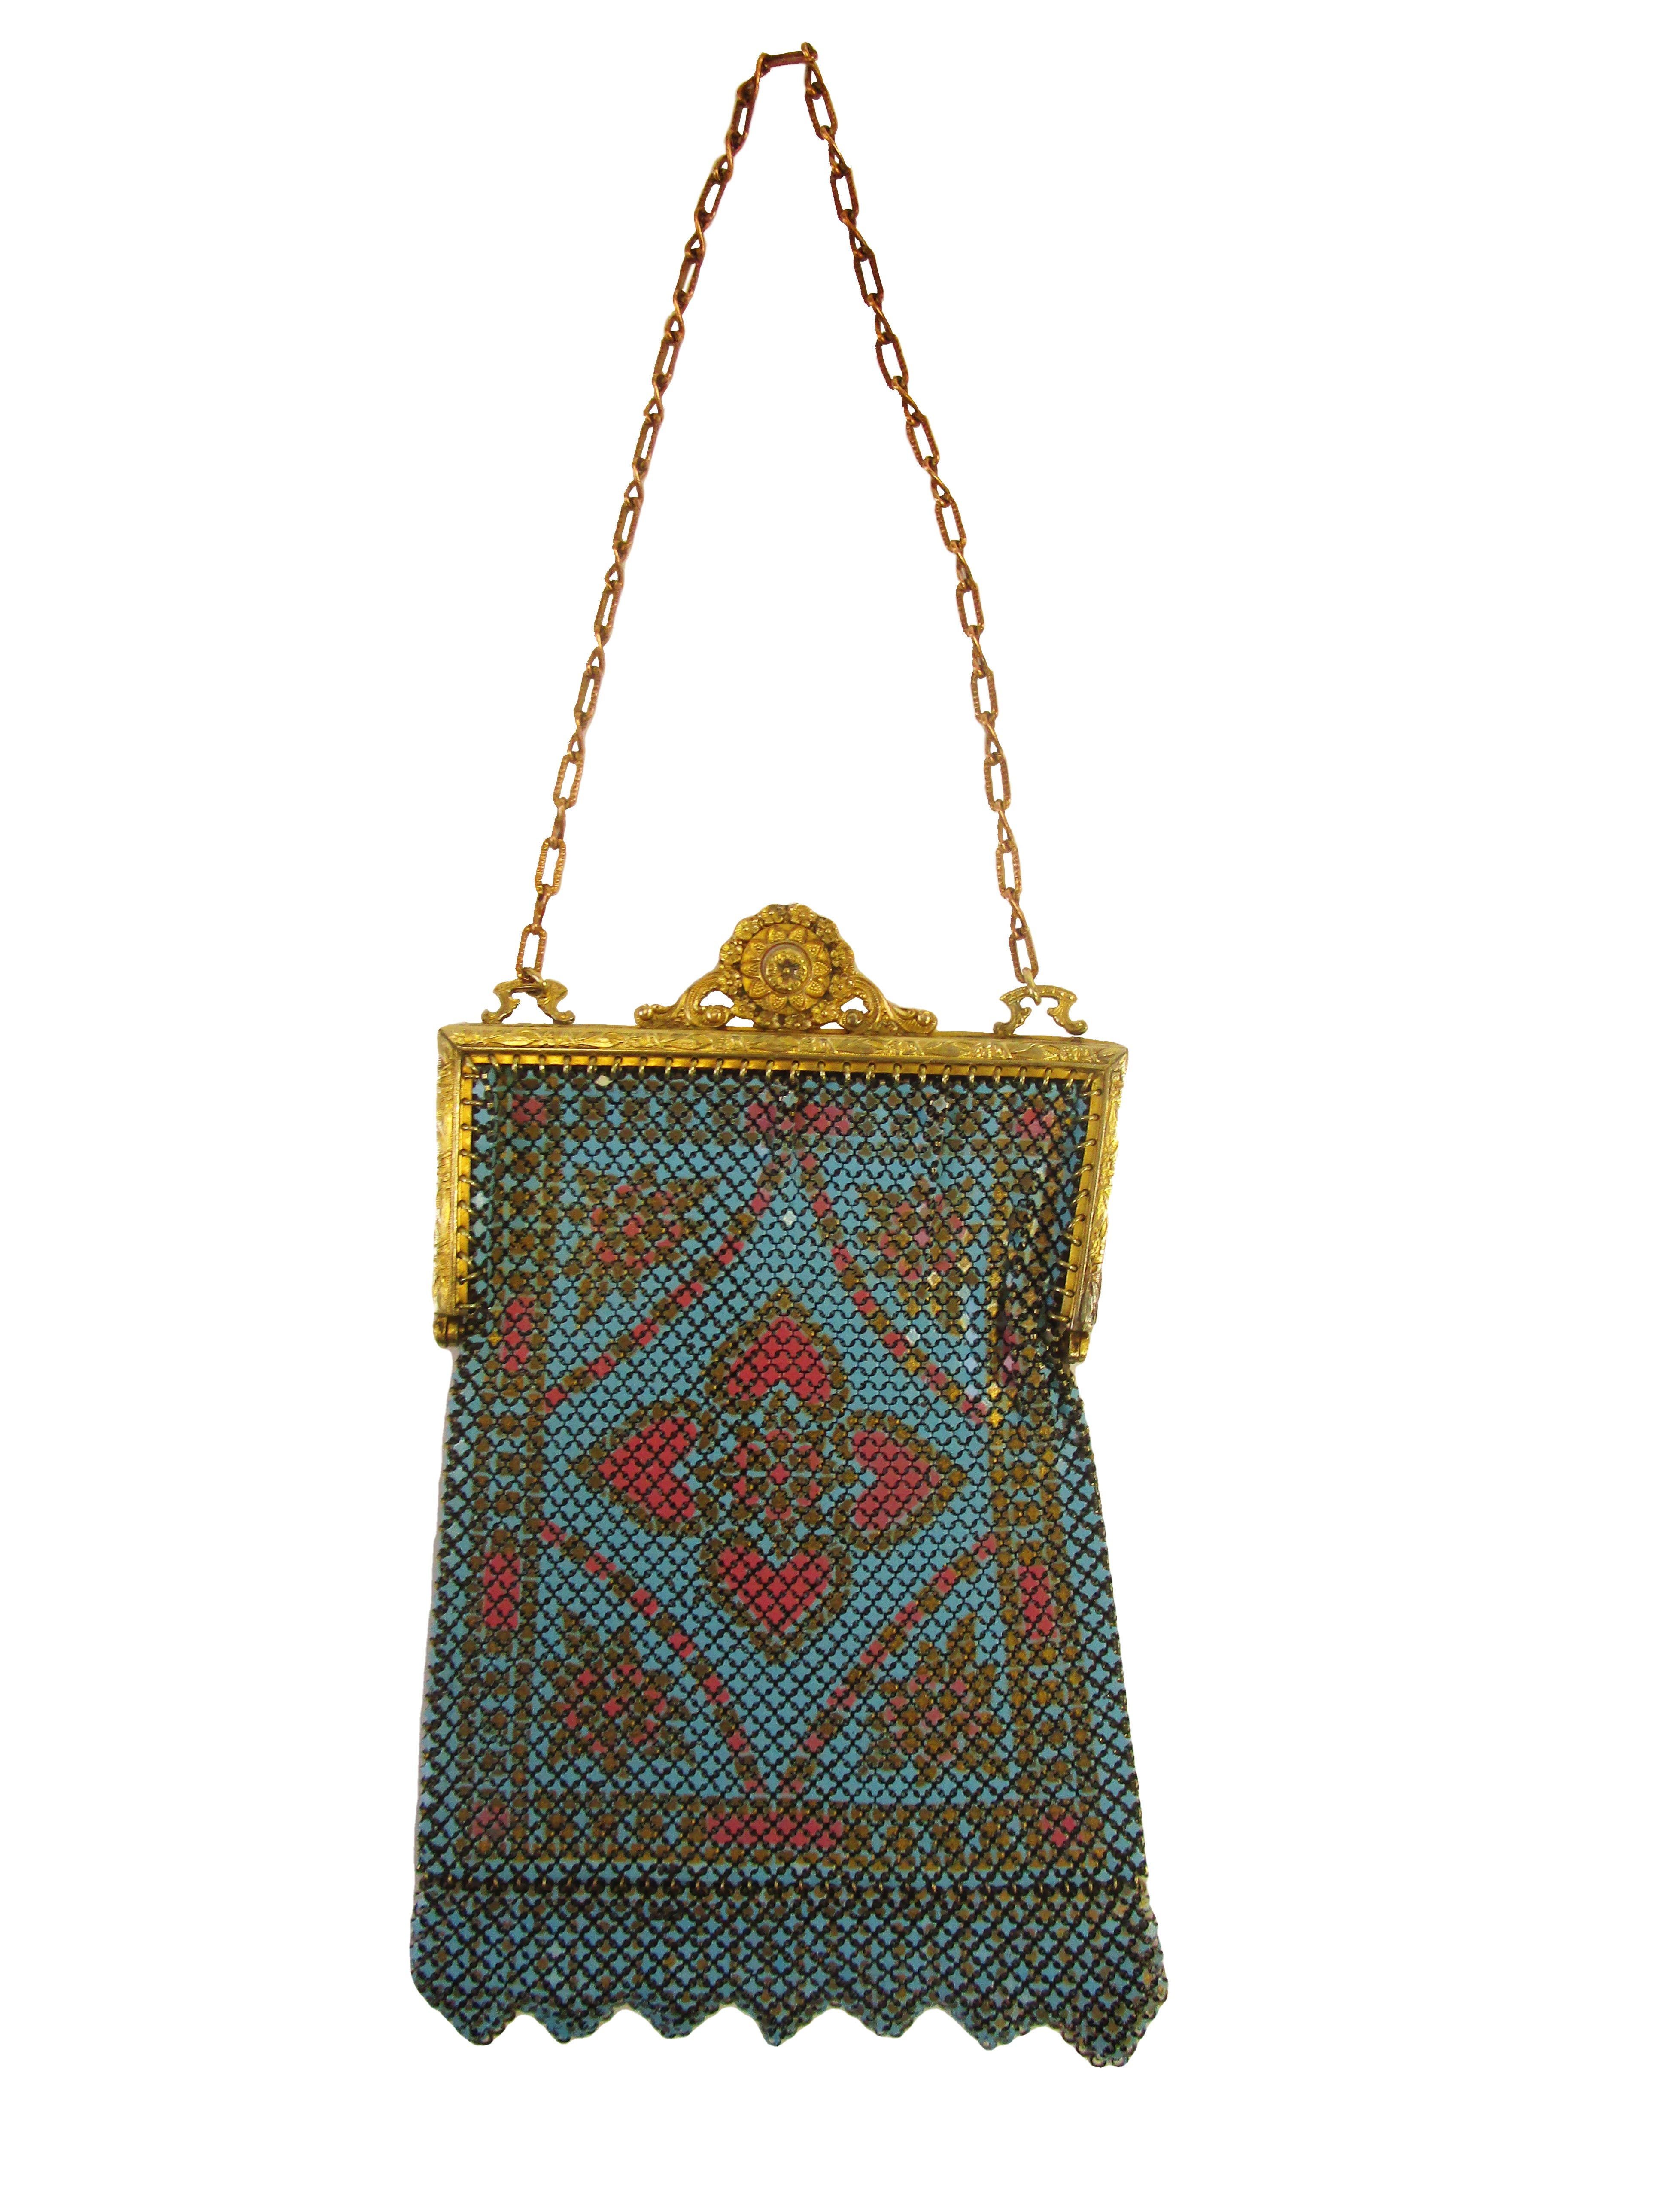 Antique Mandalian Mesh Colorful Purse Bag | eBay